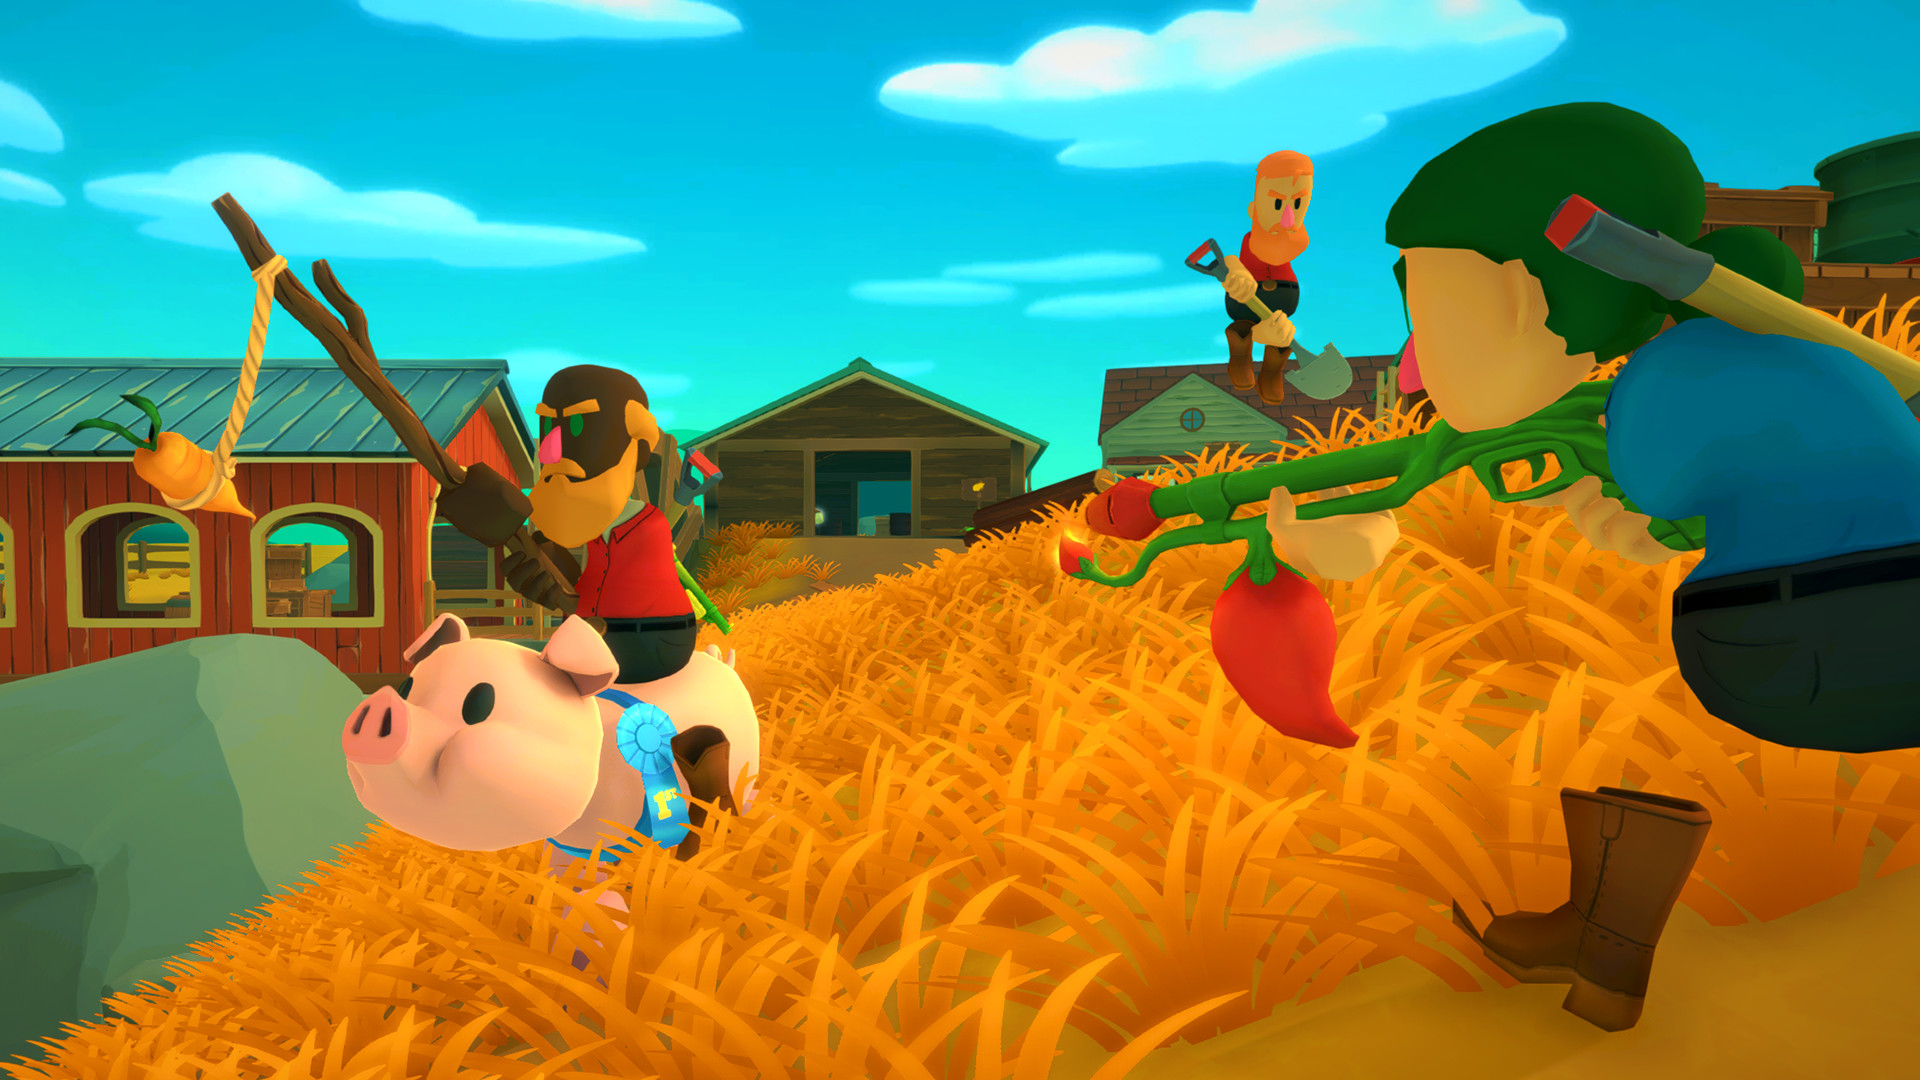 Shotgun Farmers screenshot